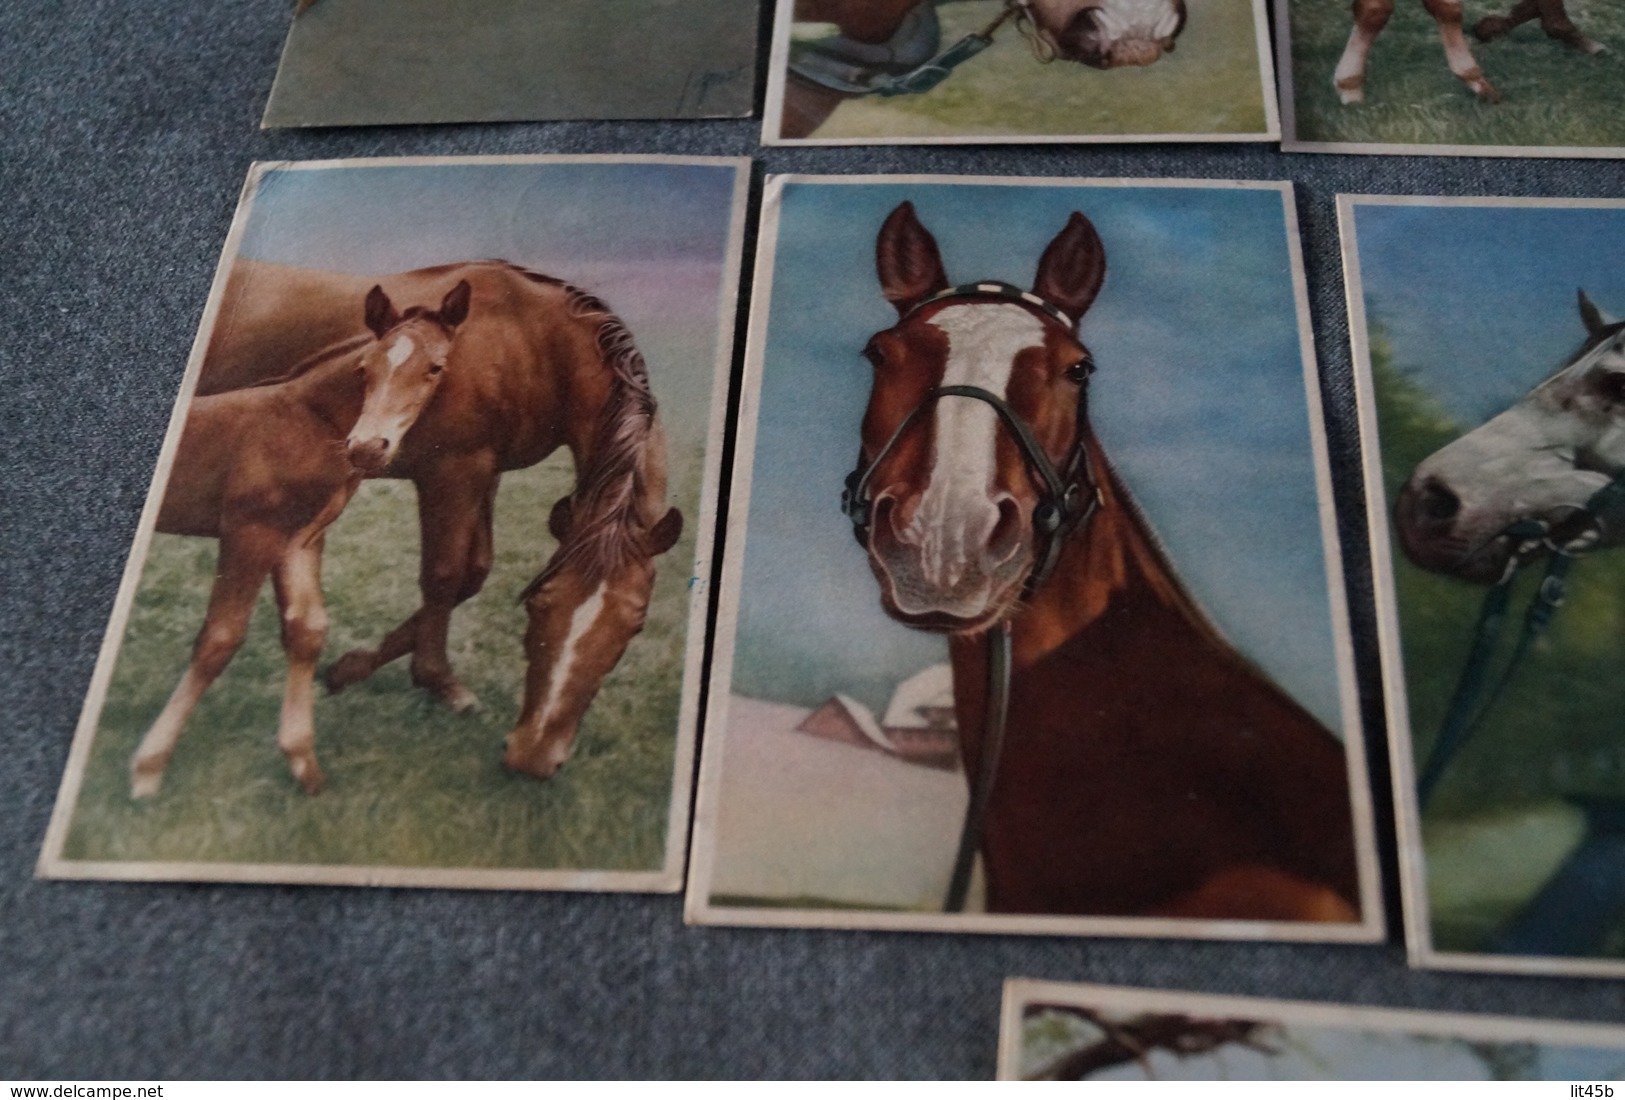 superbe lot collection de 14 cartes avec chevaux,RARE pour collection,collector